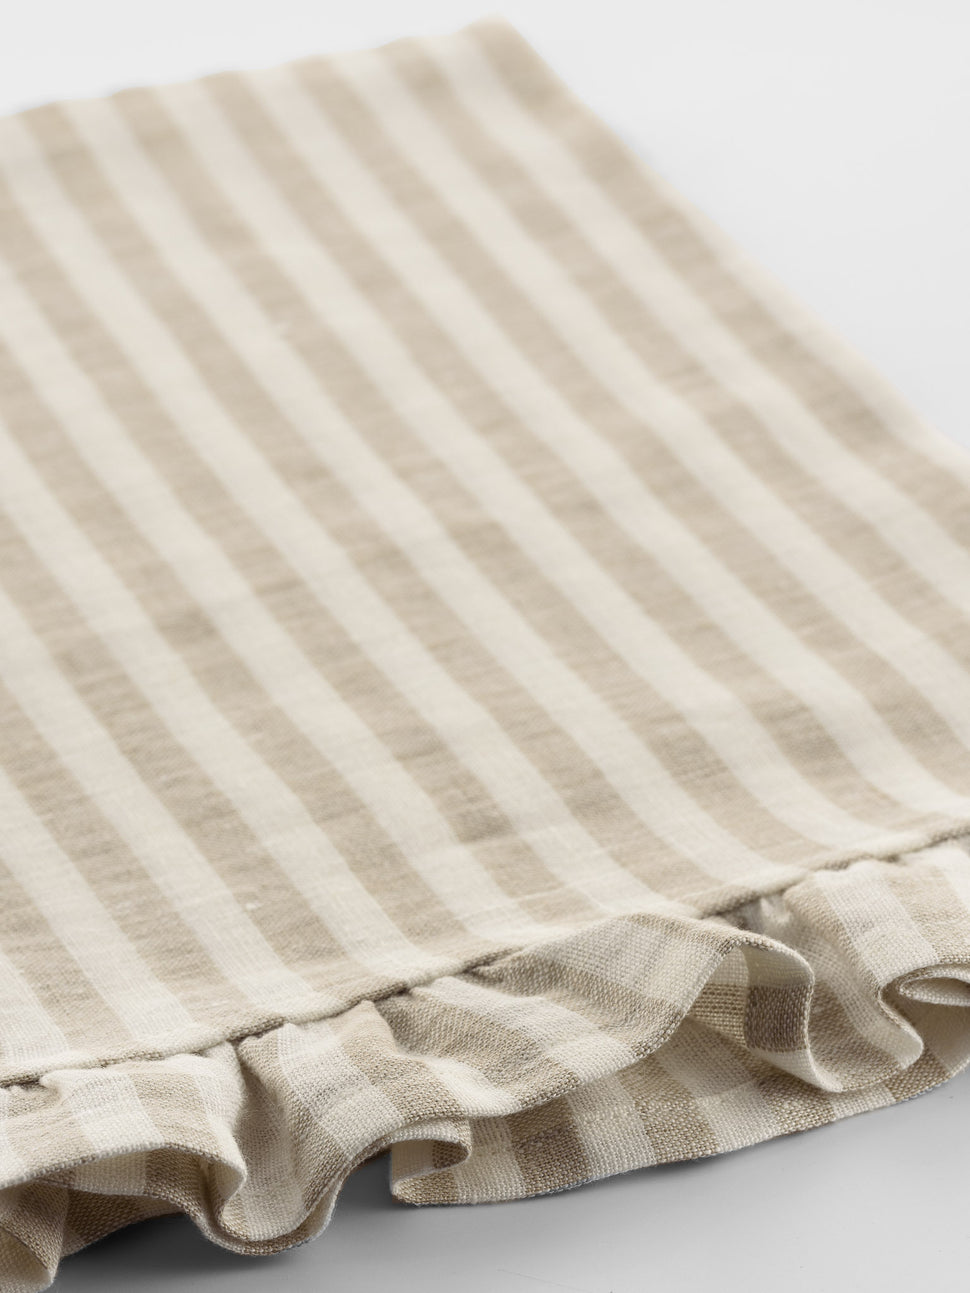 Ruffle Linen Tea Towel Natural Stripe